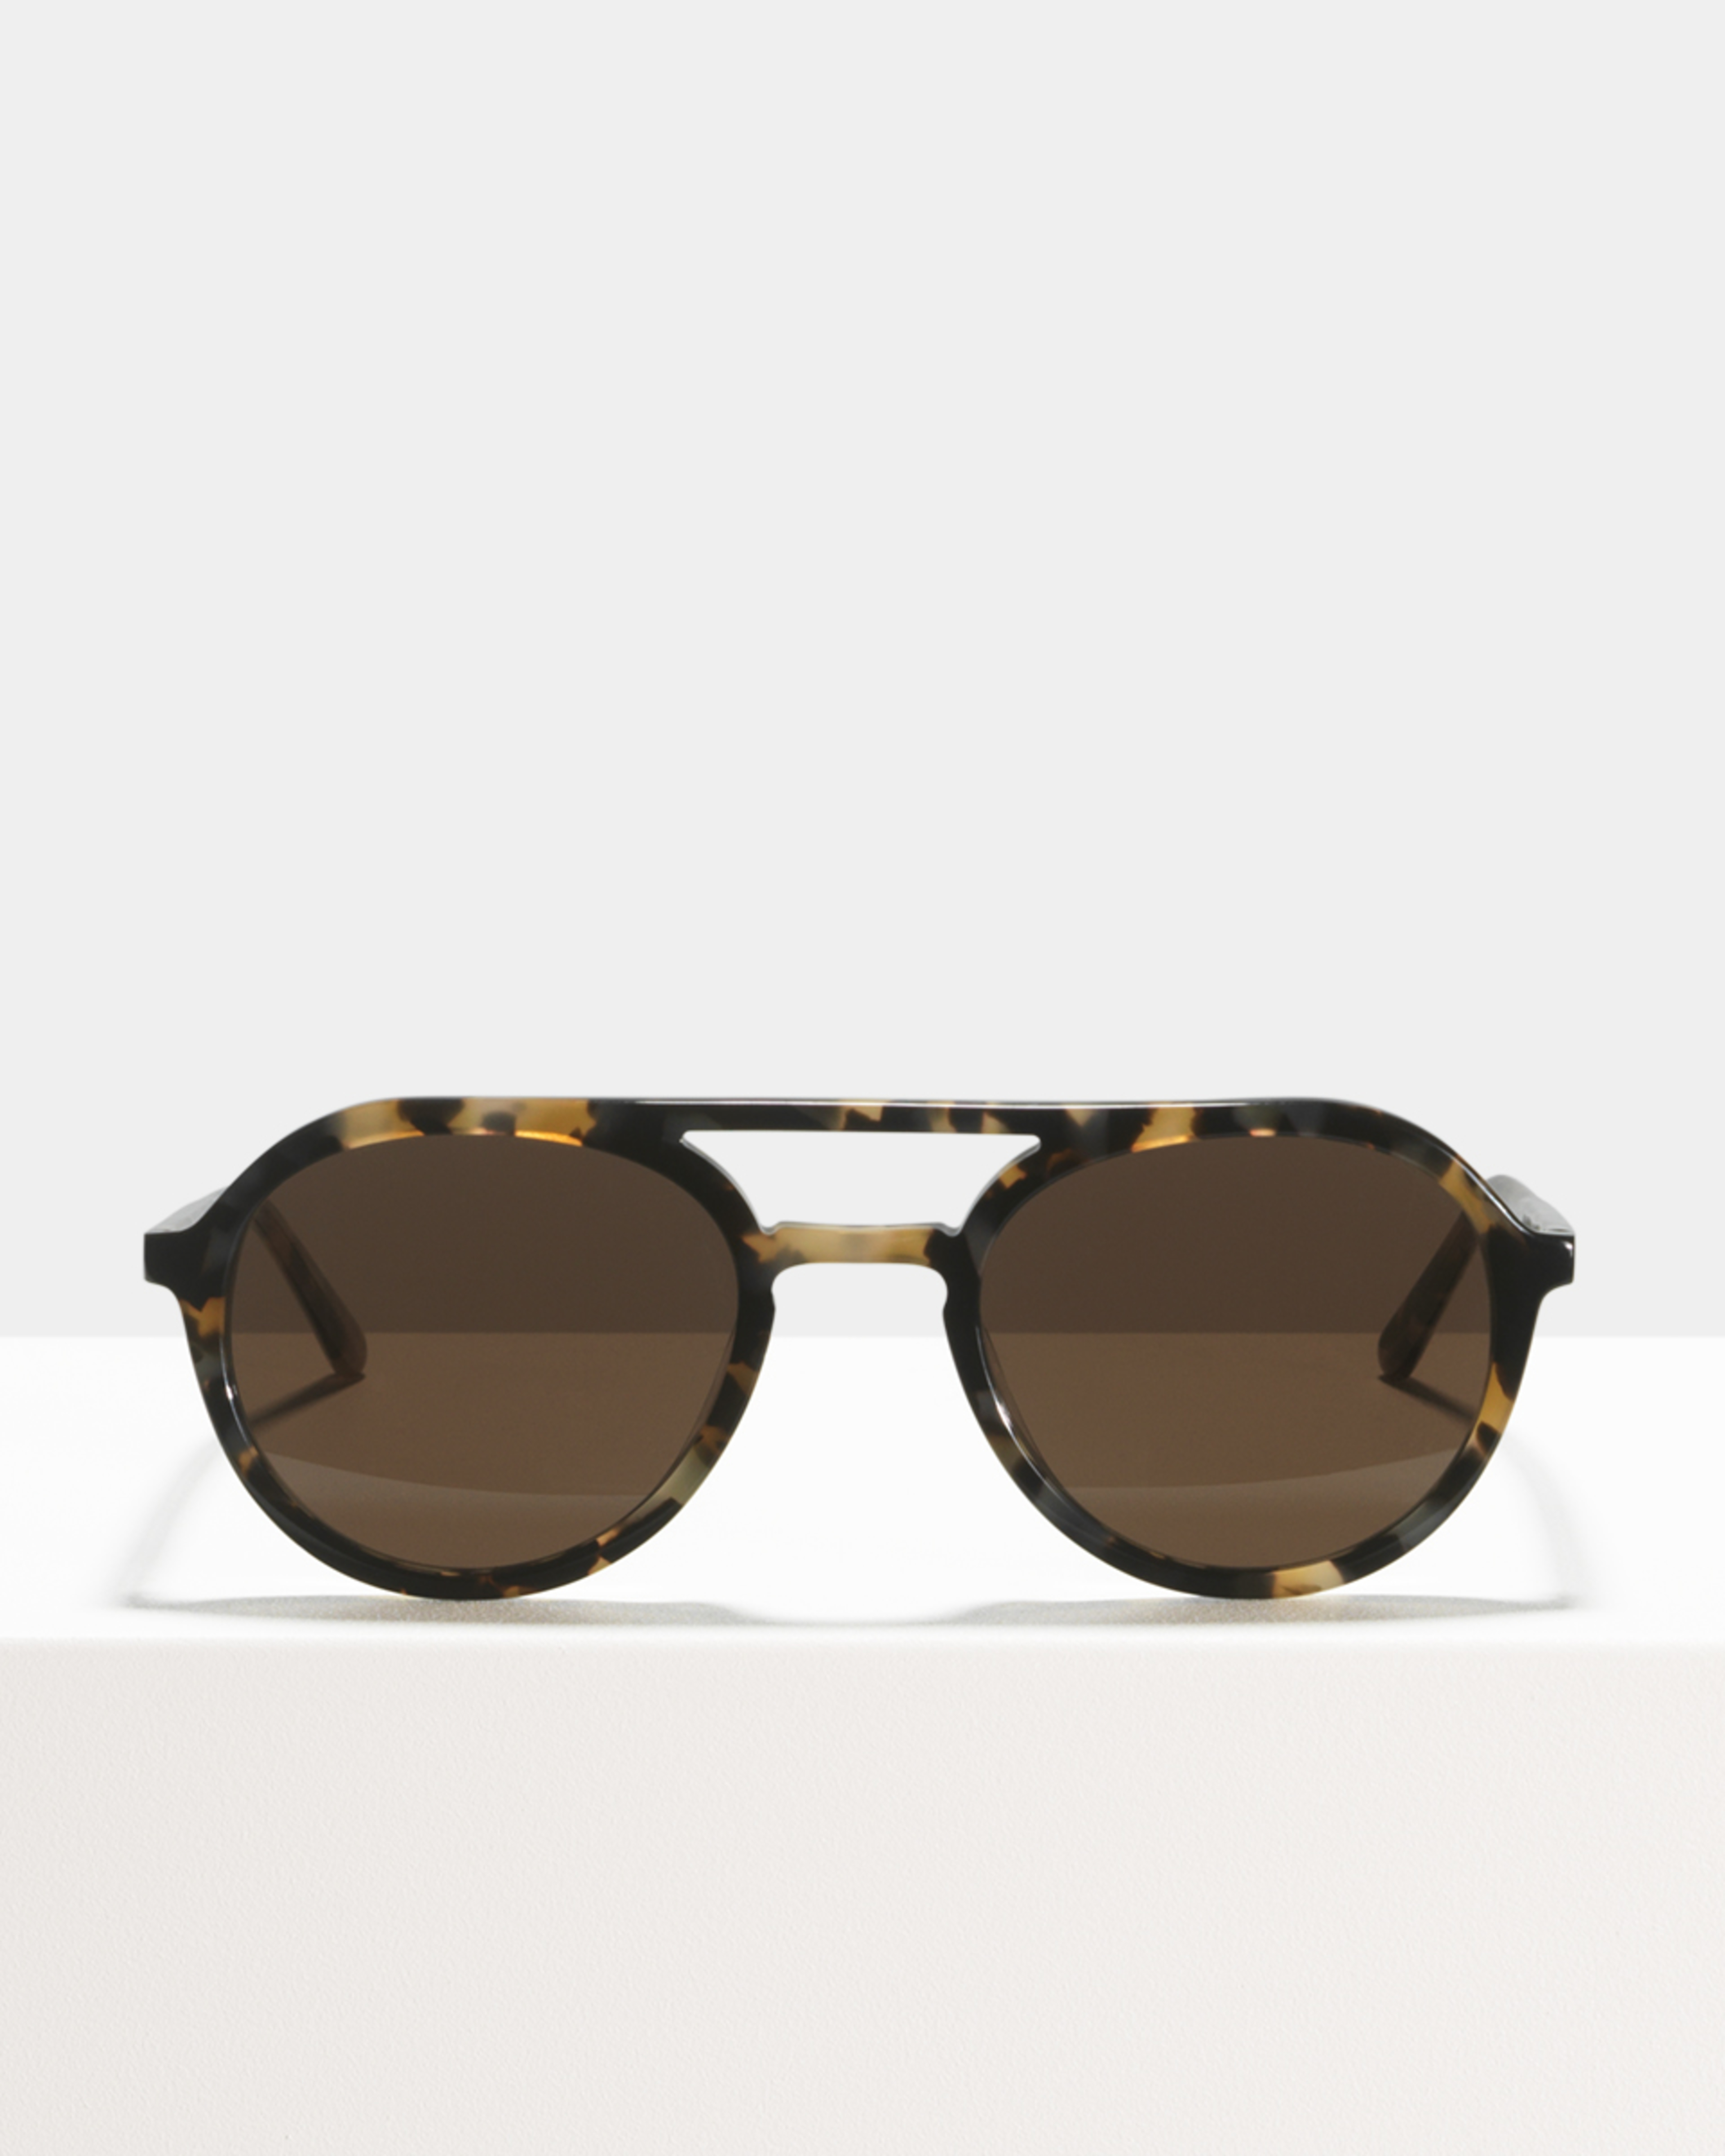 Ace & Tate Sunglasses |  acetato in Marrón